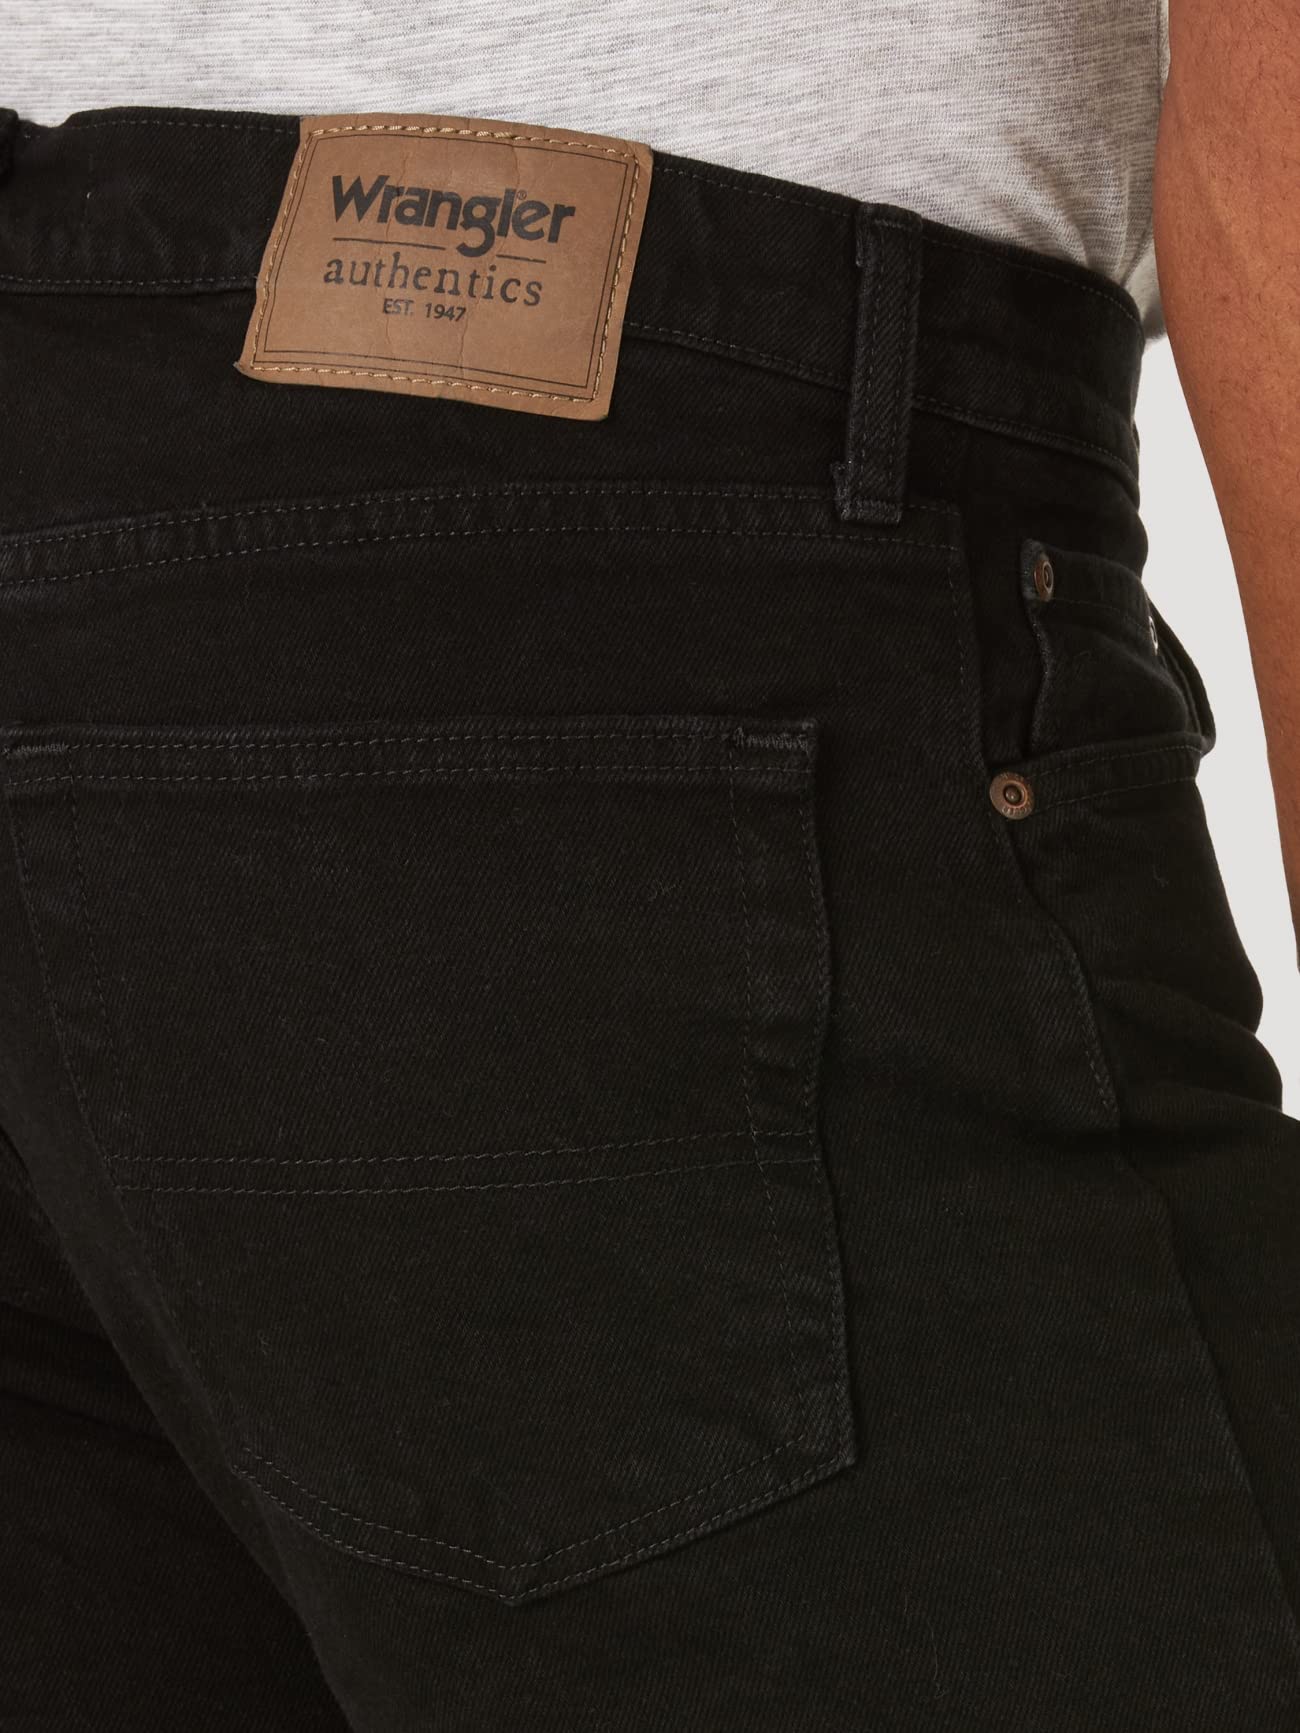 Wrangler Authentics Men's Classic Relaxed Fit Five Pocket Jean Short, Jet Black, 48